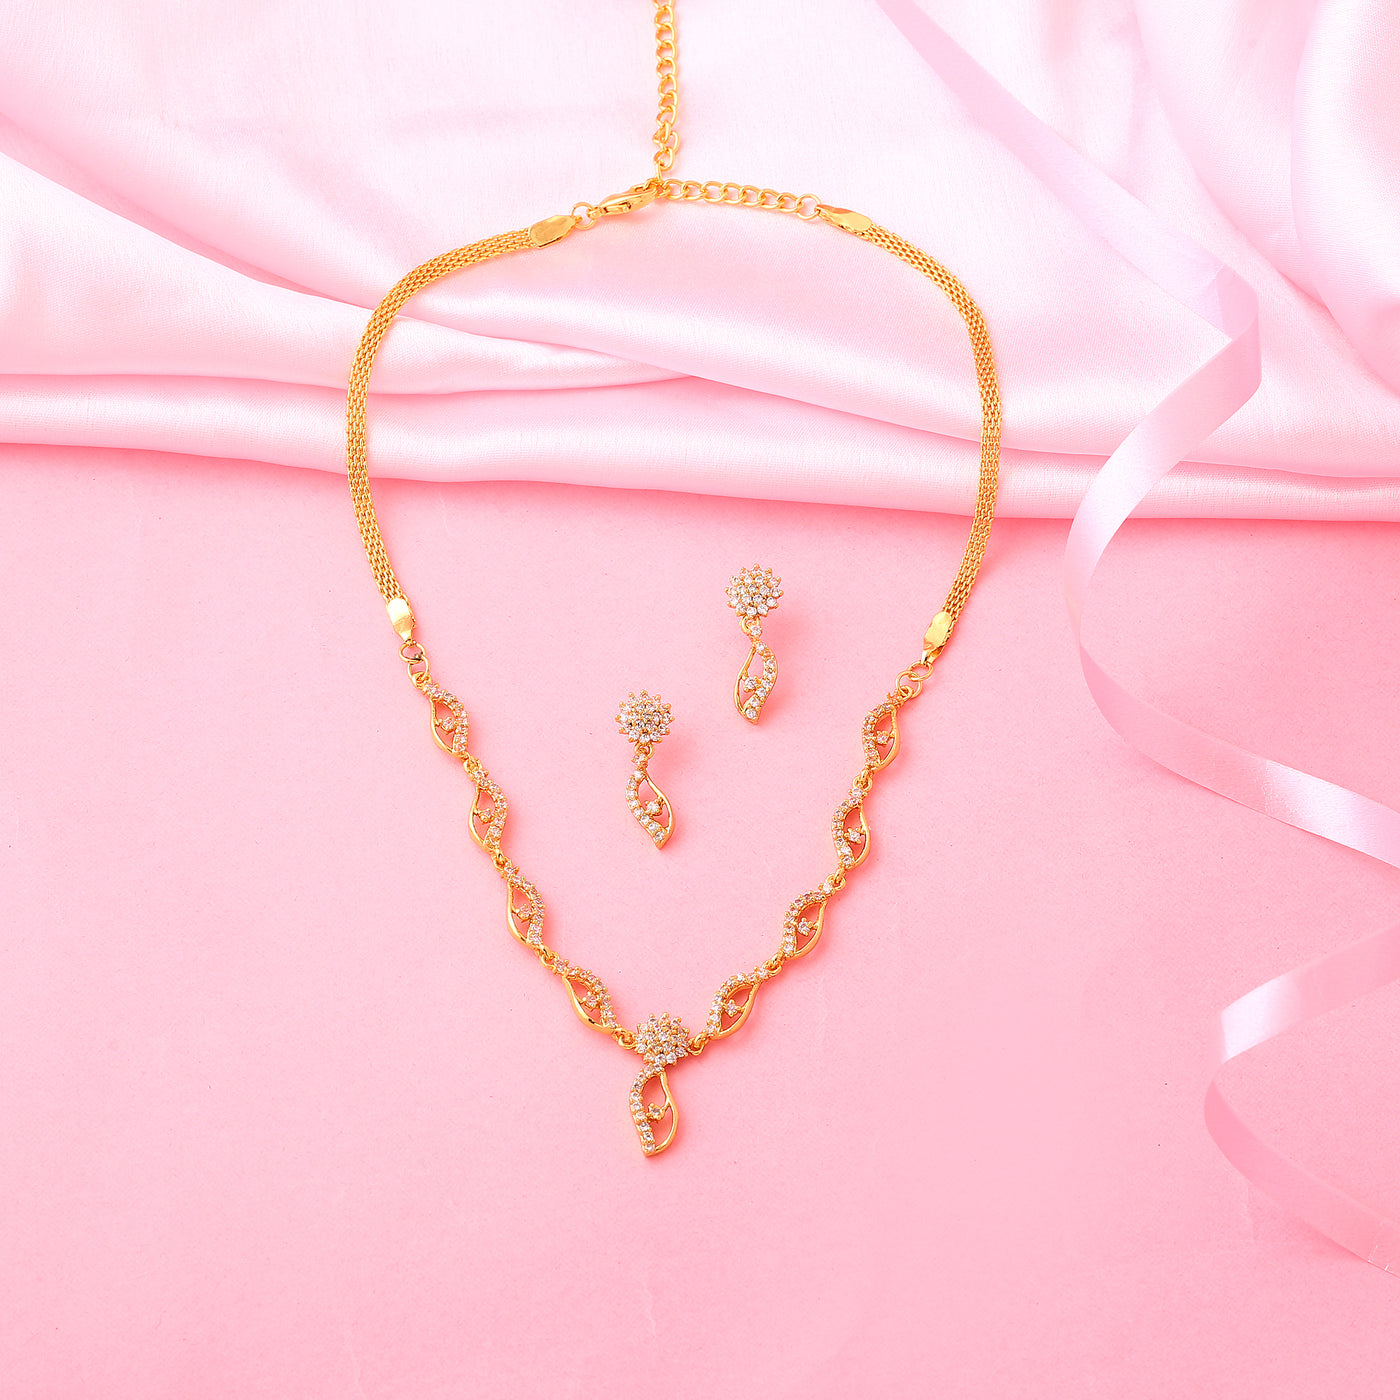 Estele Gold Plated CZ Elegant Necklace Set for Women